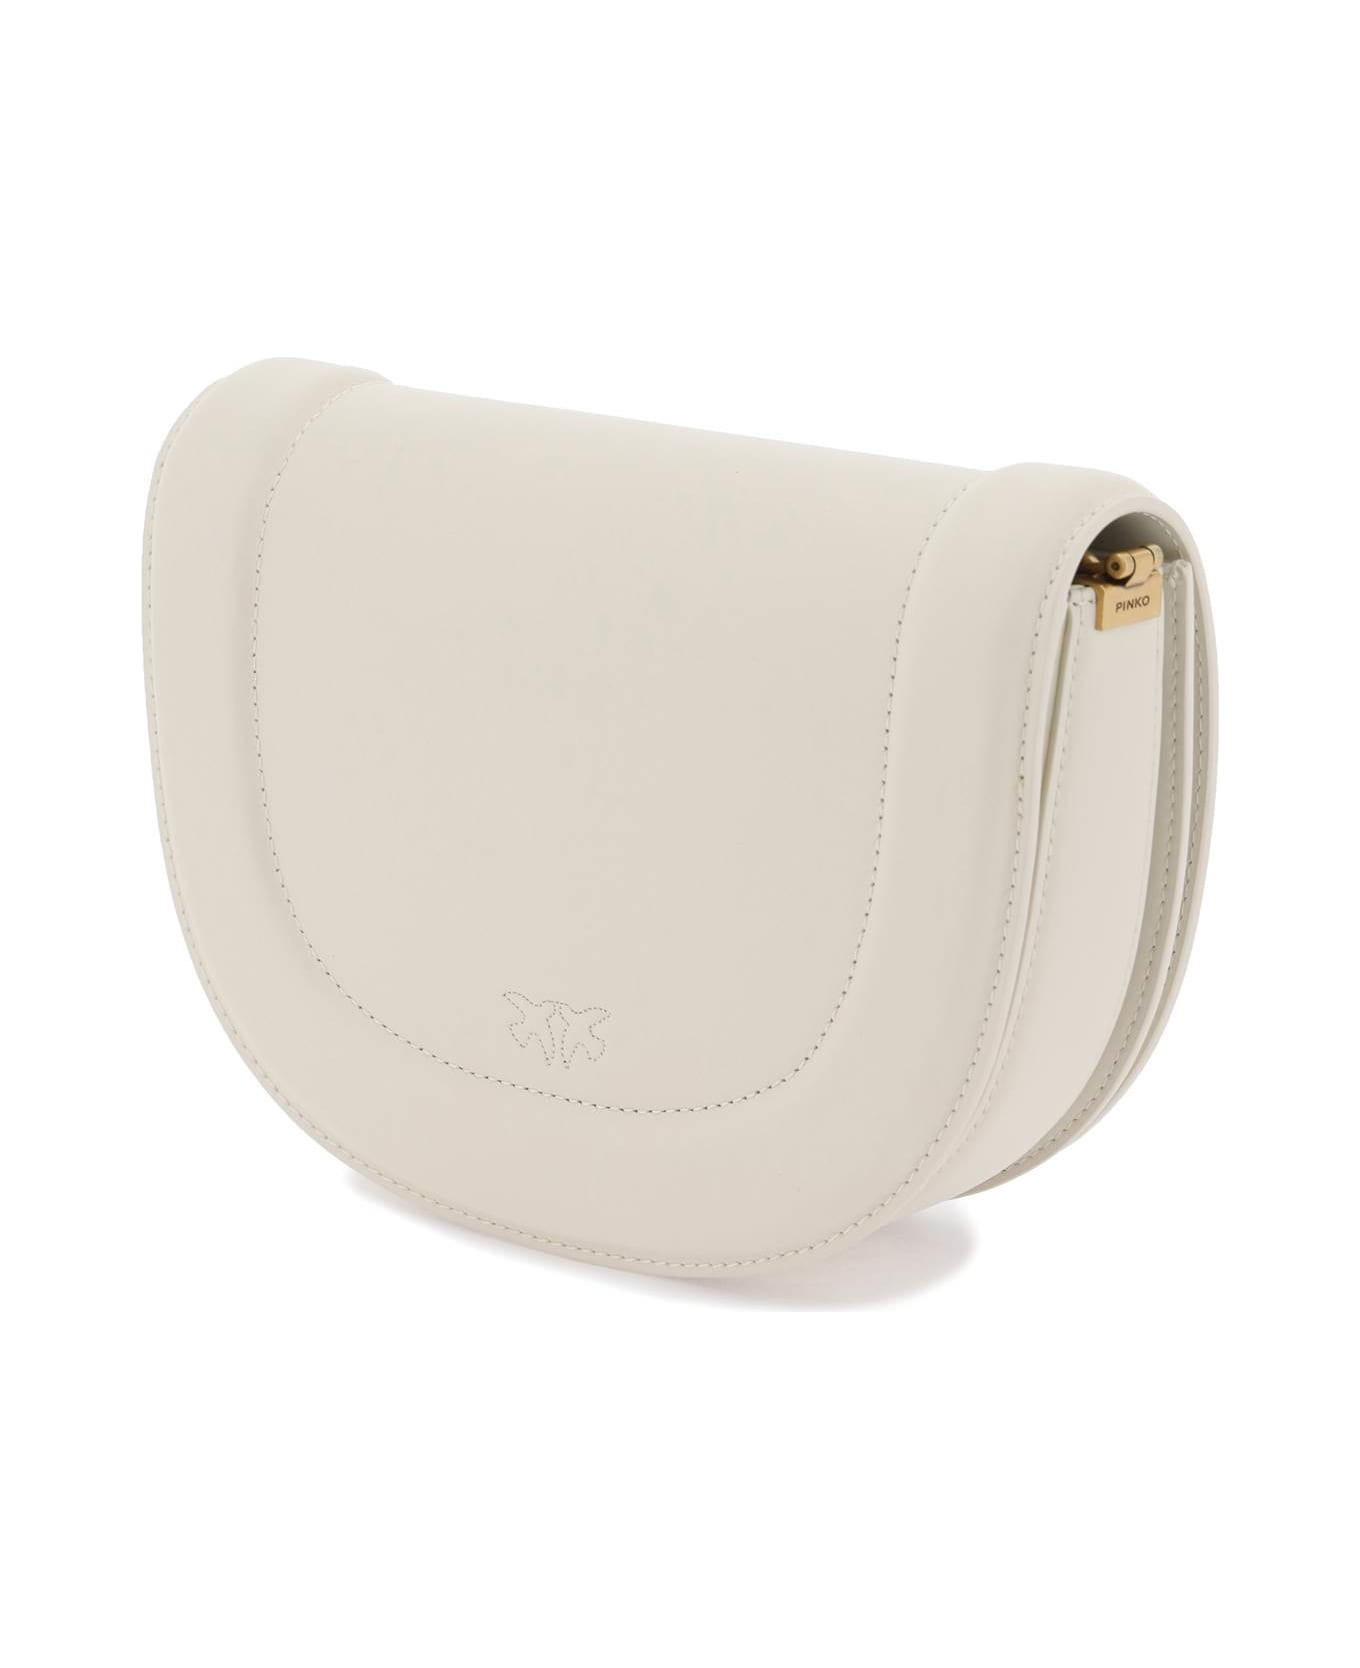 Pinko Love Bag Click Round Leather Bag - BIANCO SETA ANTIQUE GOLD (White)